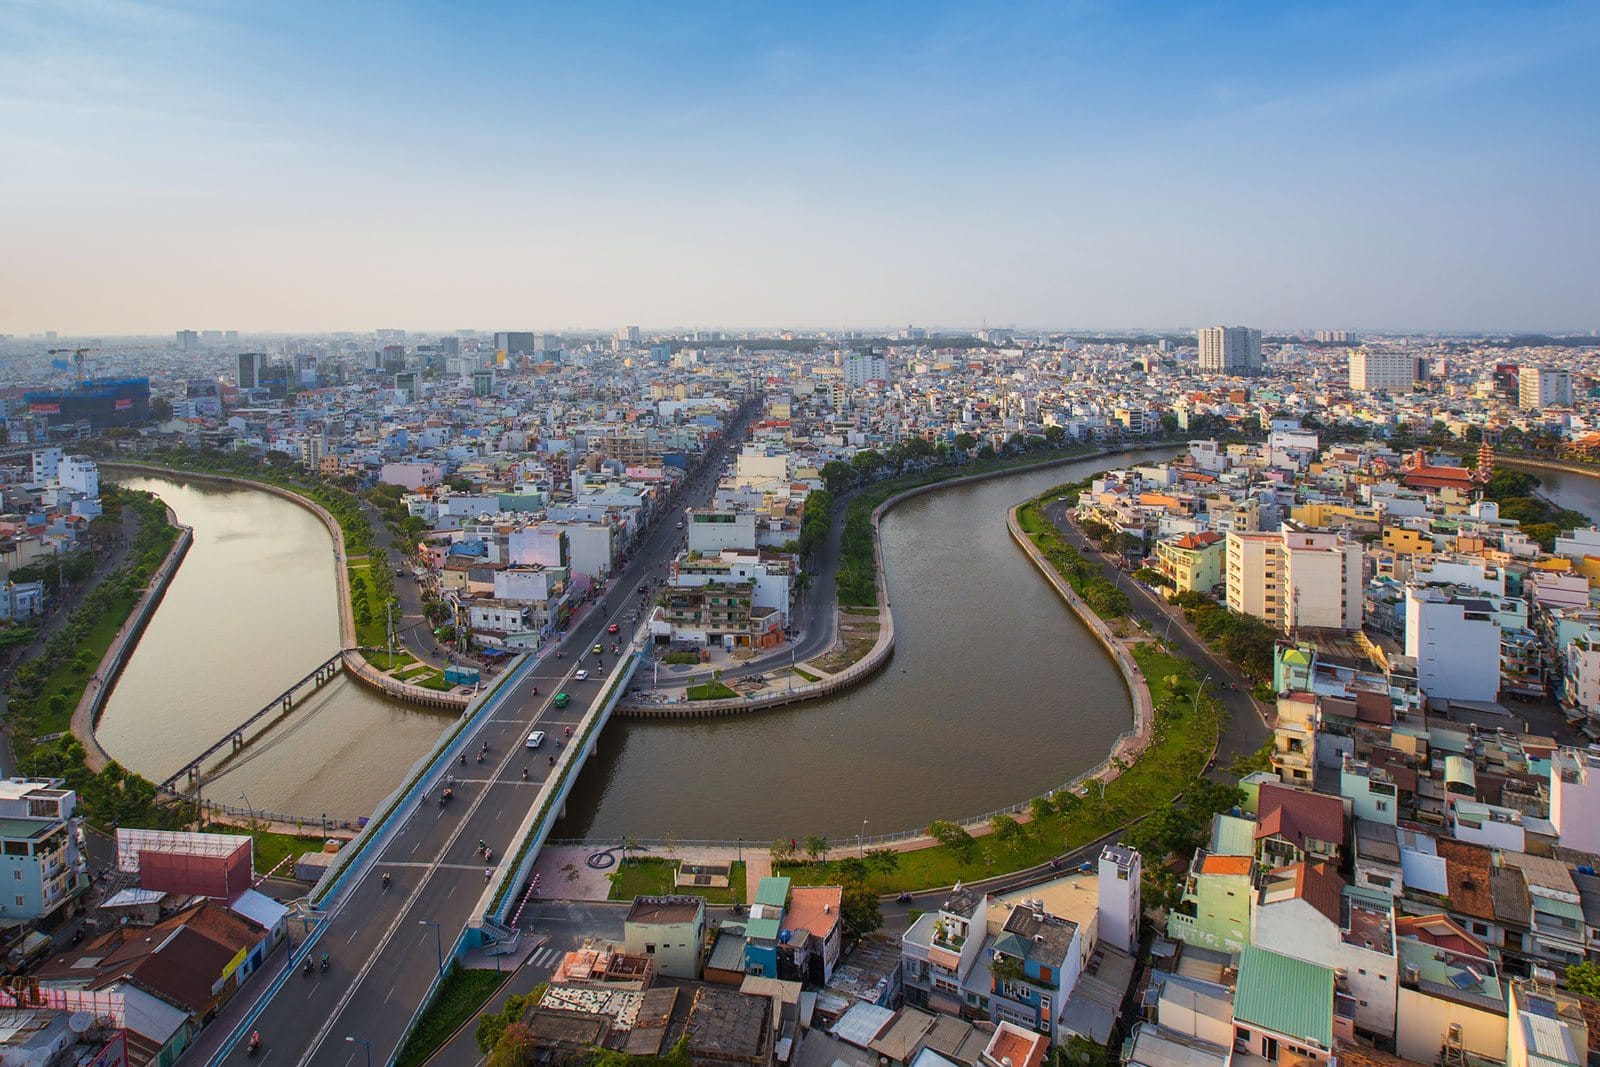 Views of the Saigon River